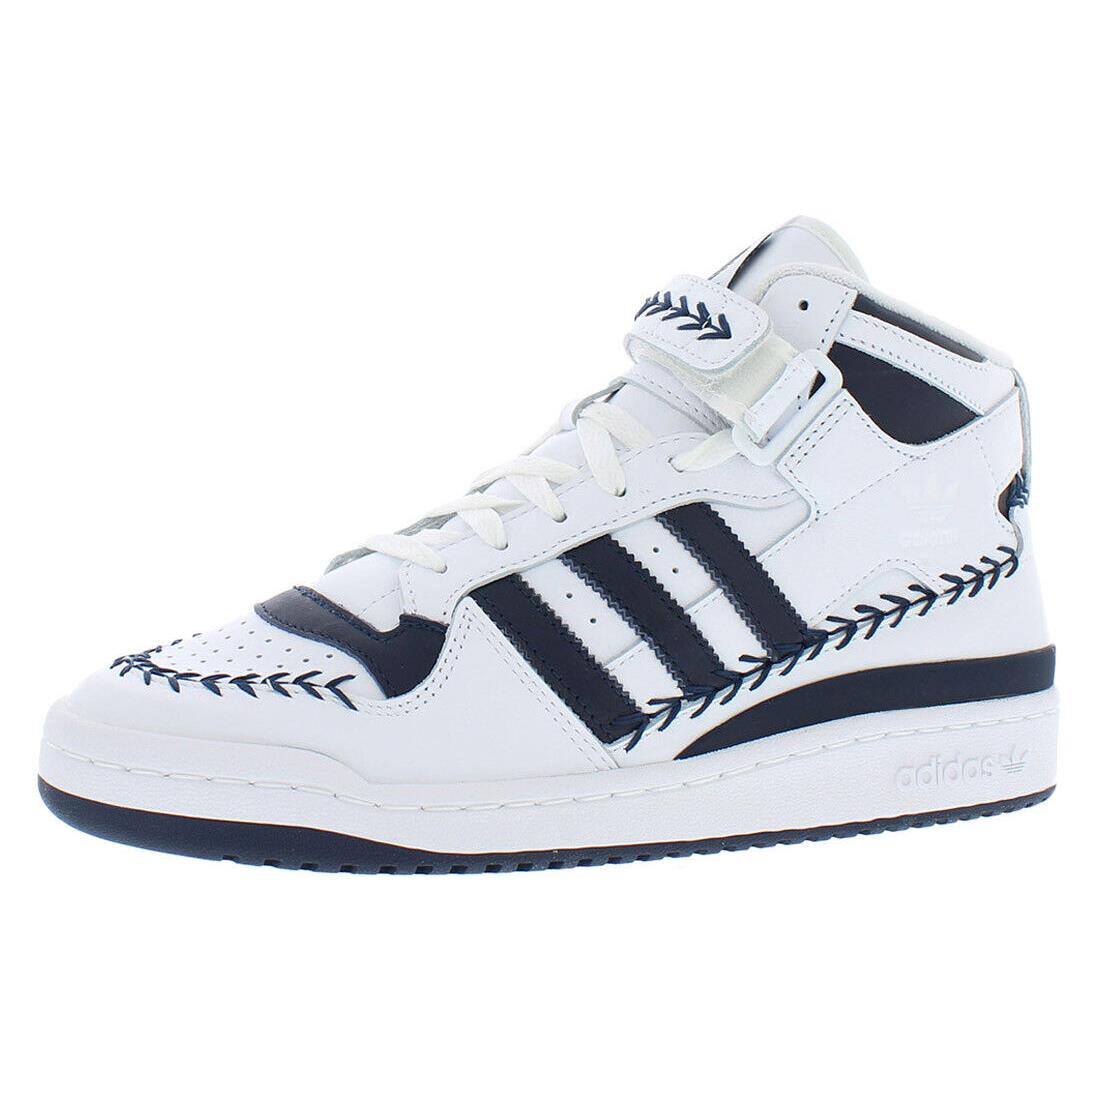 Adidas Forum Mid Mens Shoes - Footwear White/Collegiate Navy/Footwear White, Main: White